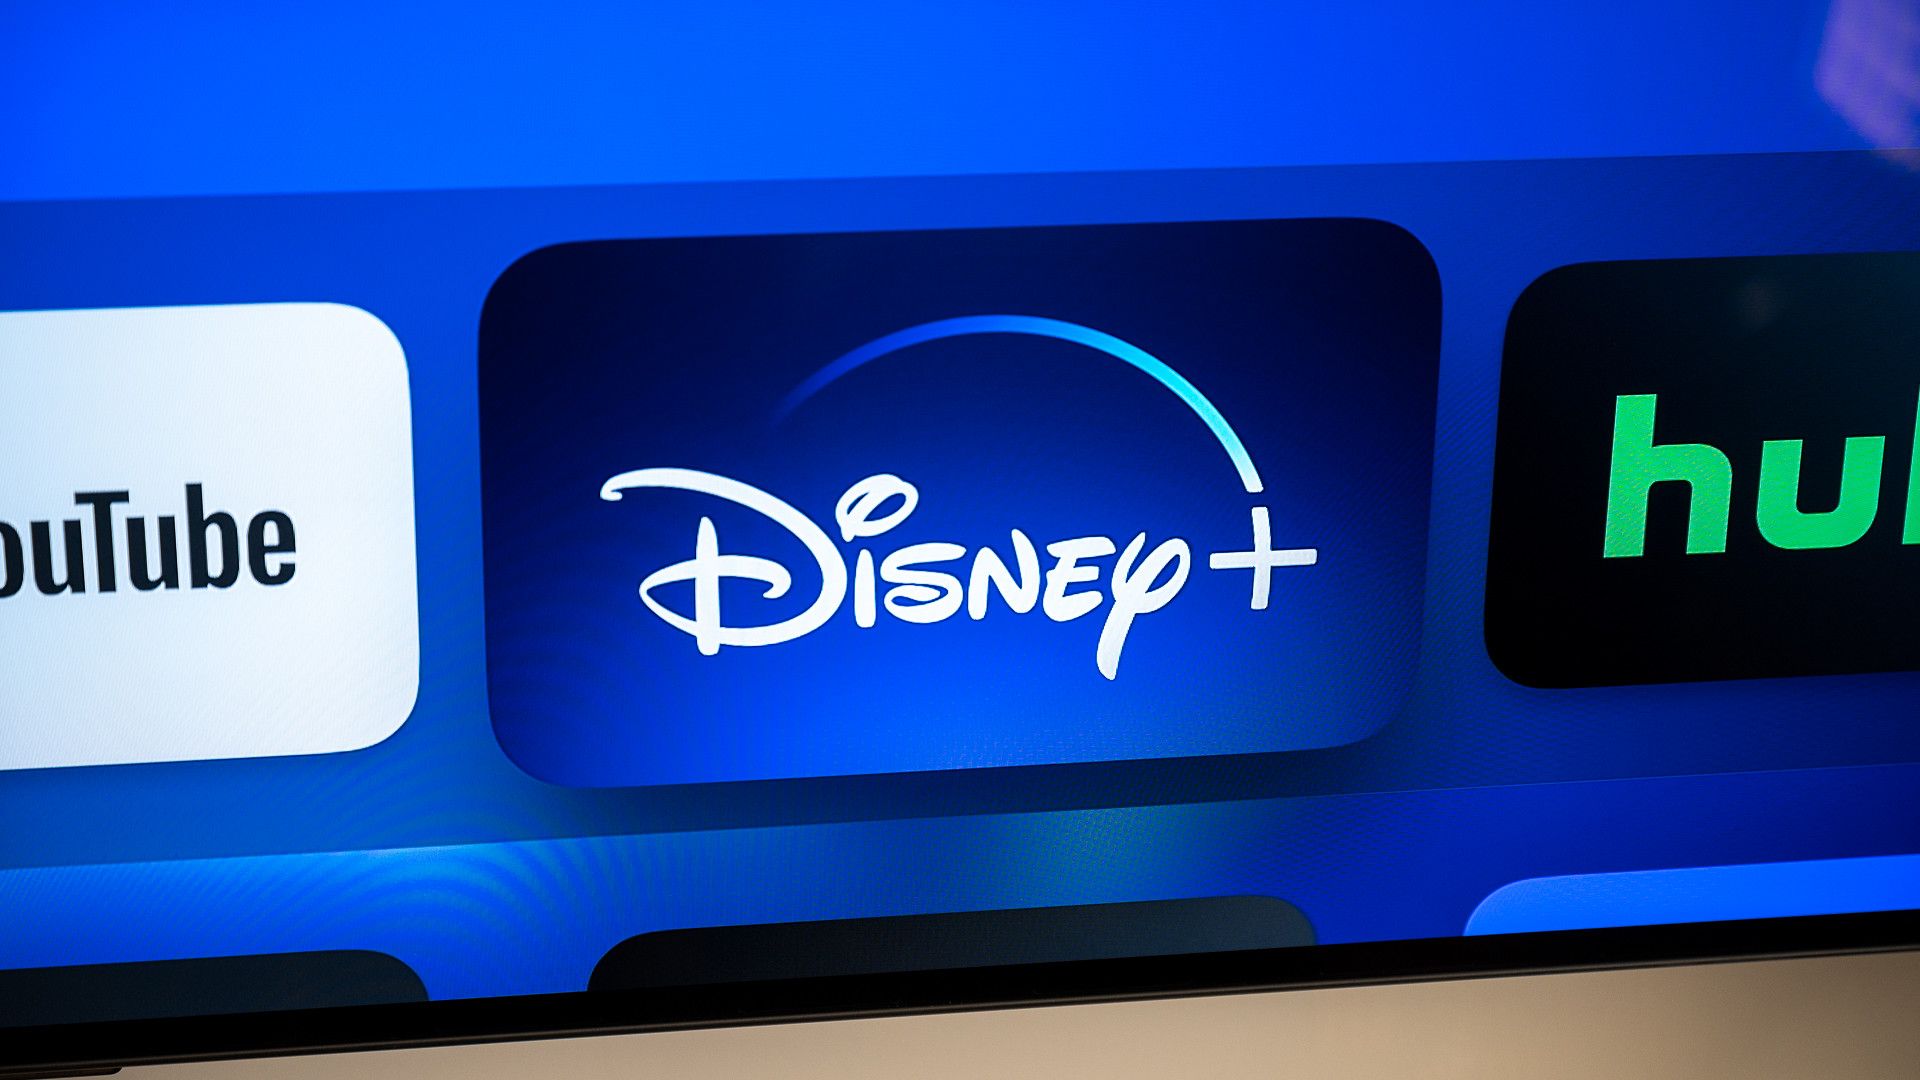 Disney+ app icon on an Apple TV